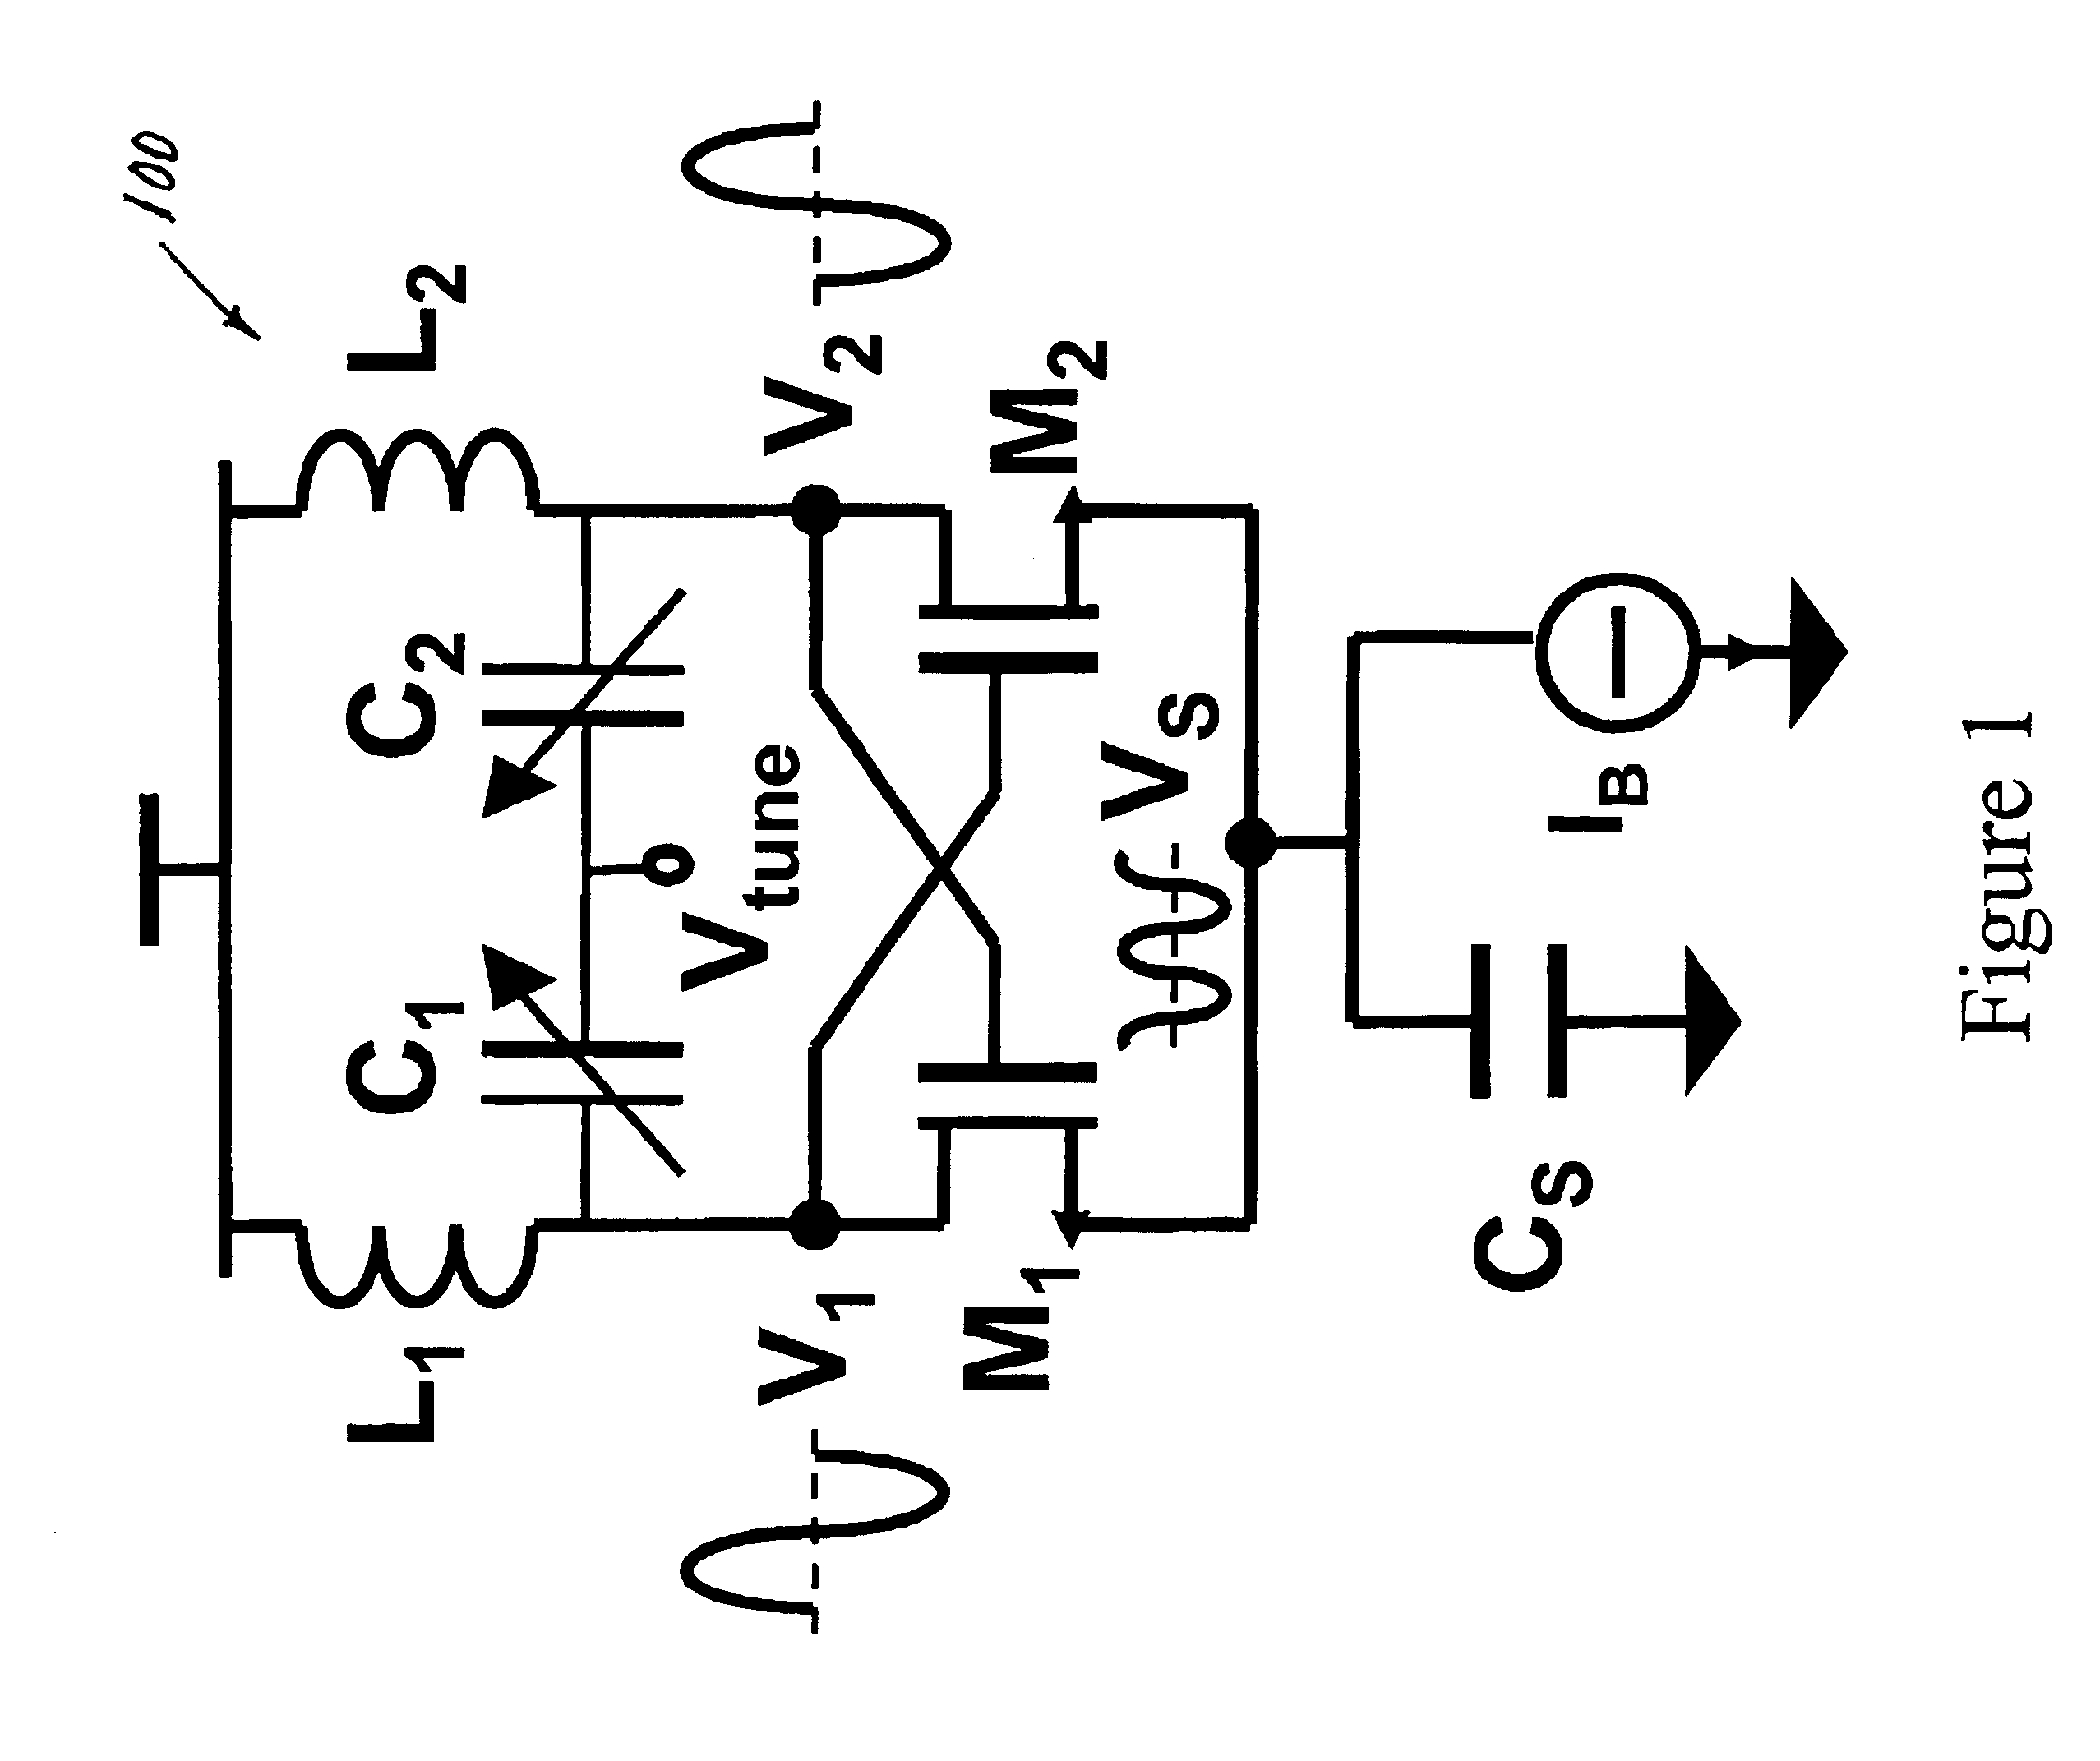 Quadrature voltage controlled oscillator utilizing common-mode inductive coupling